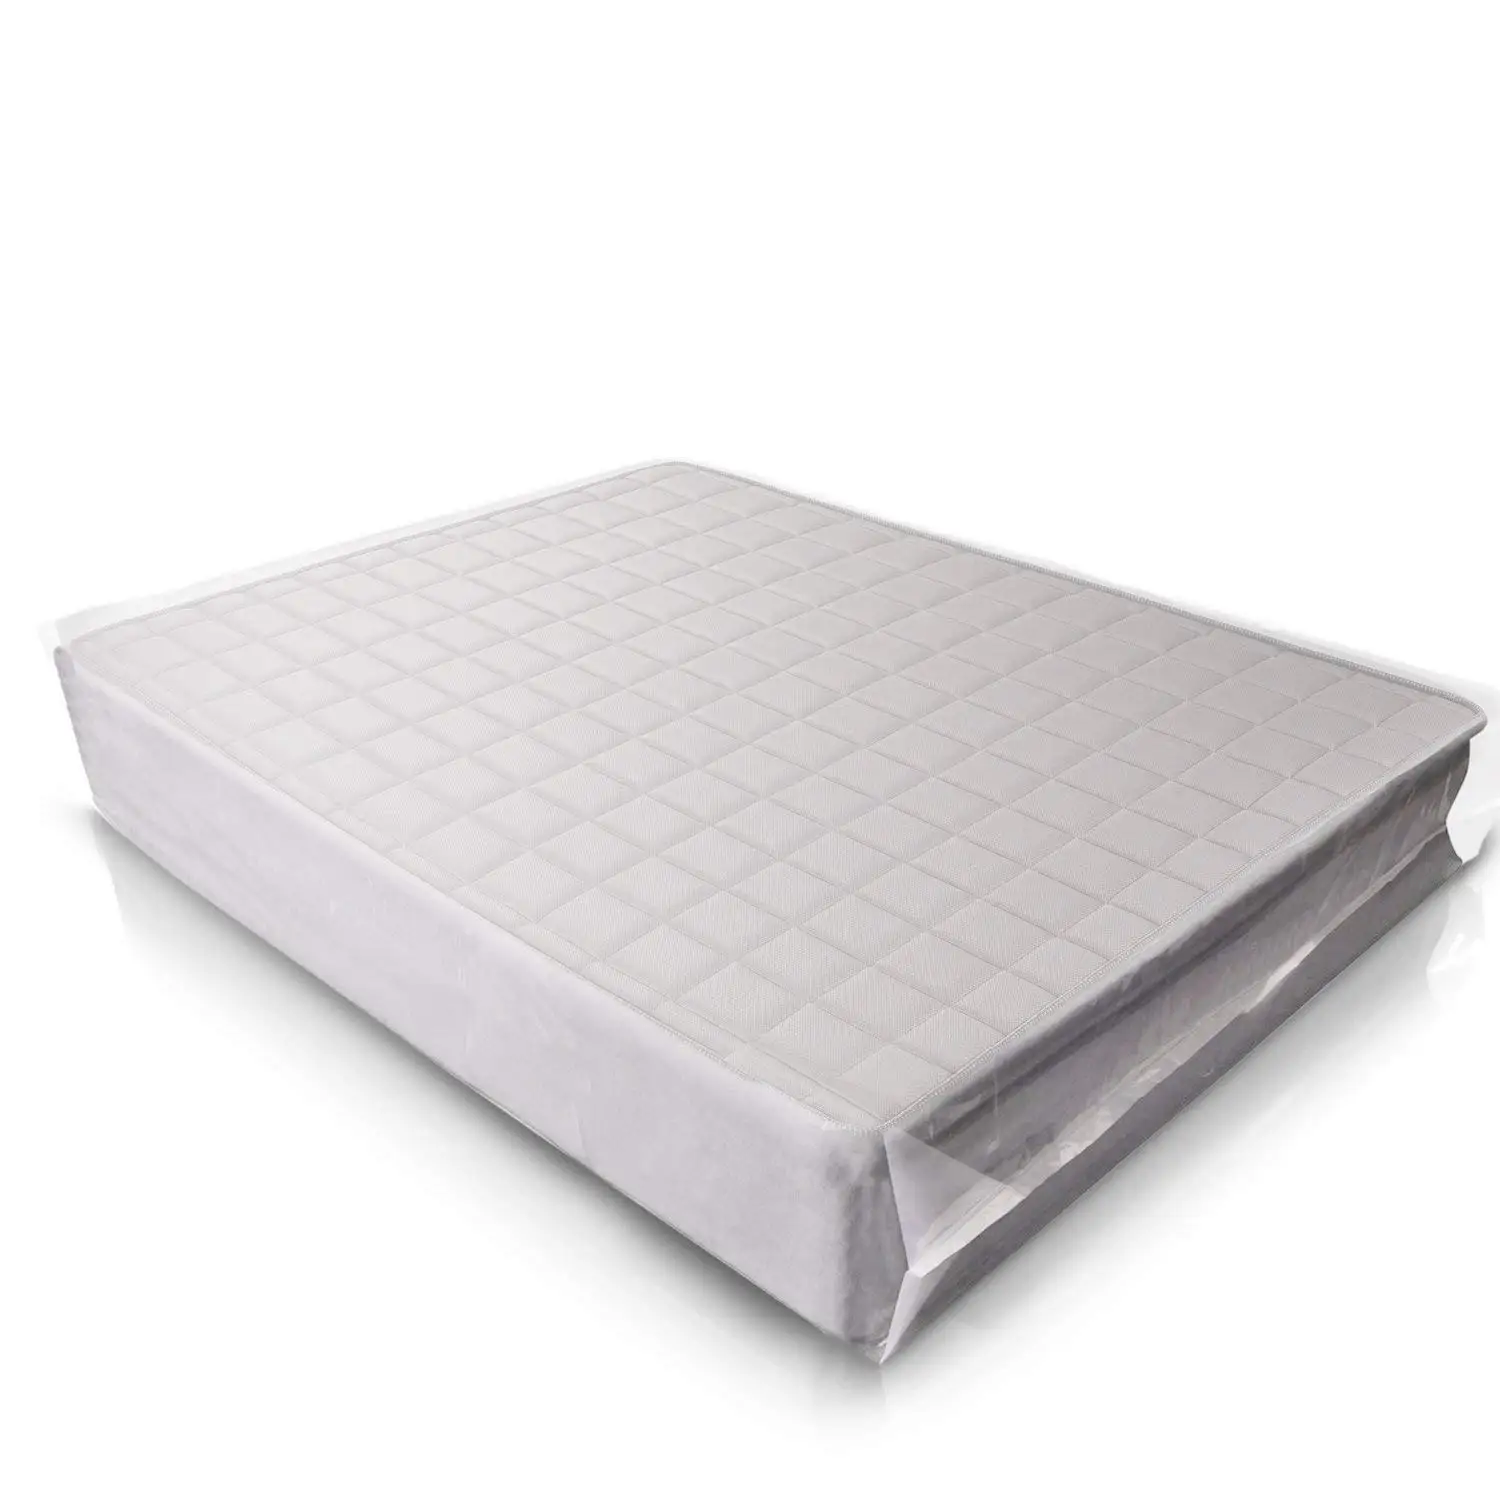 
China foshan high quality perforate mattress plastic bag roll for queen mattress  (1600138684588)